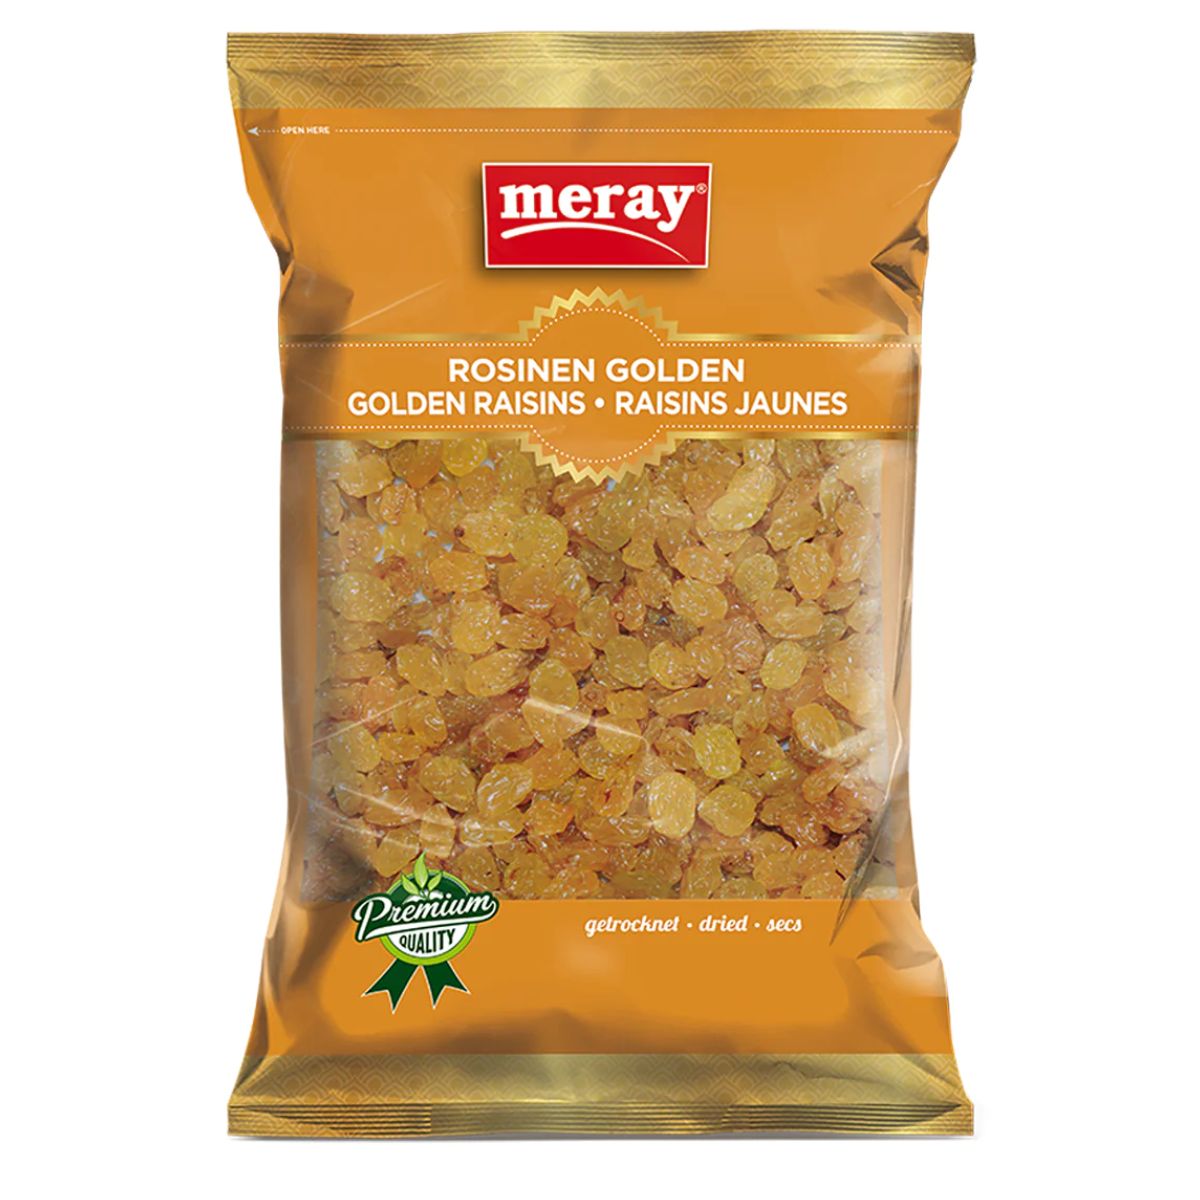 A package of Meray - Golden Raisins Jumbo - 150g.